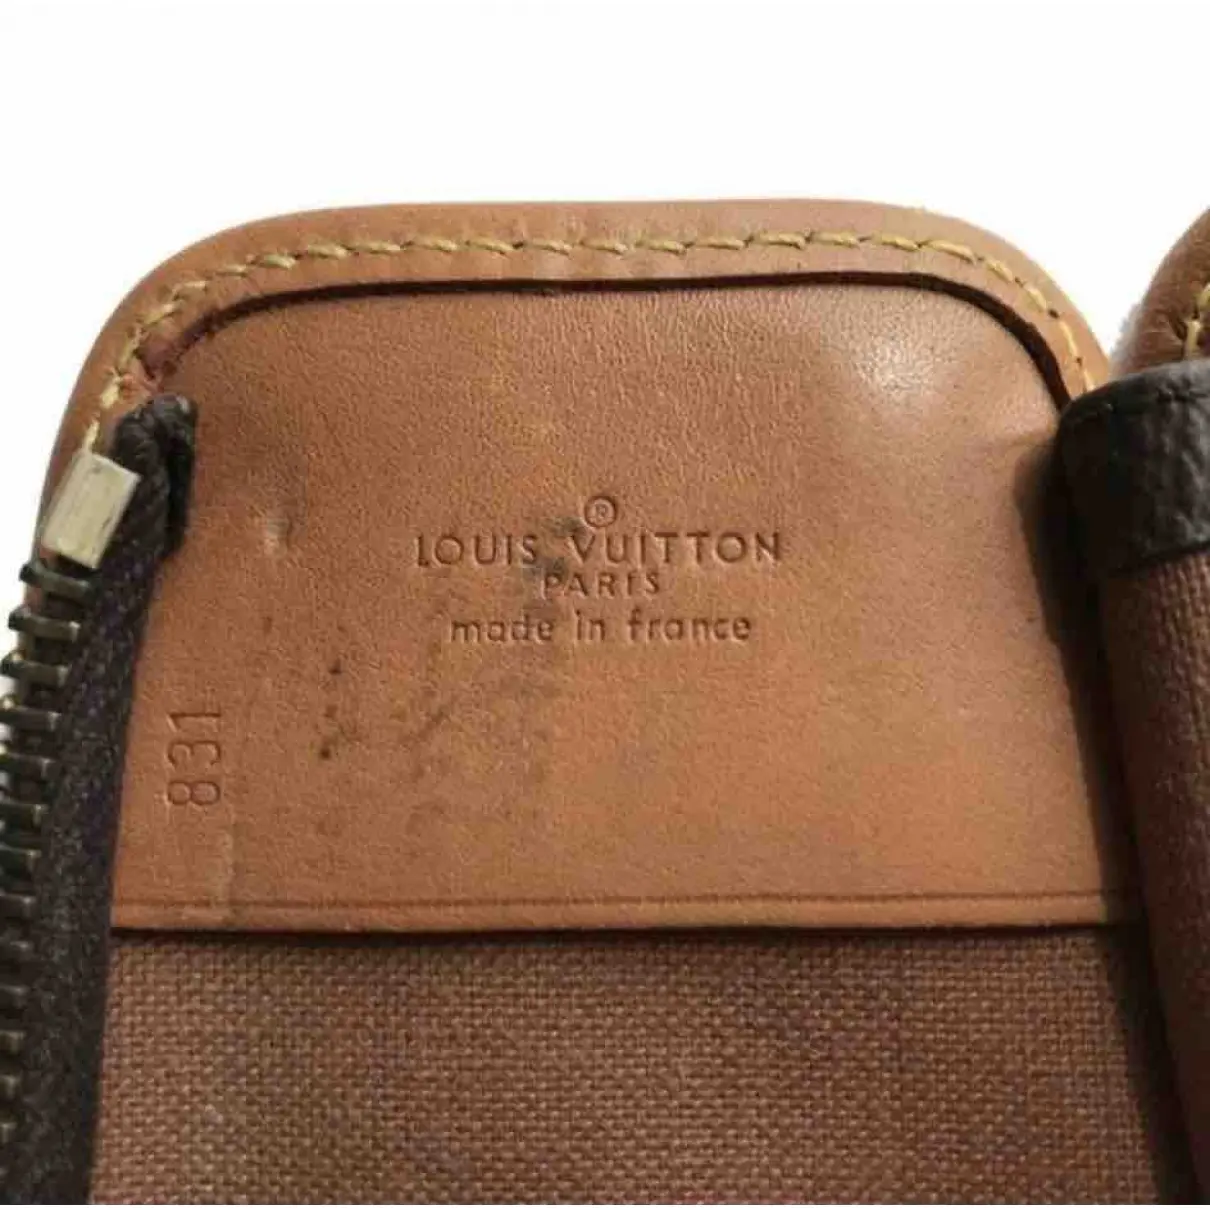 Buy Louis Vuitton Racket cover online - Vintage